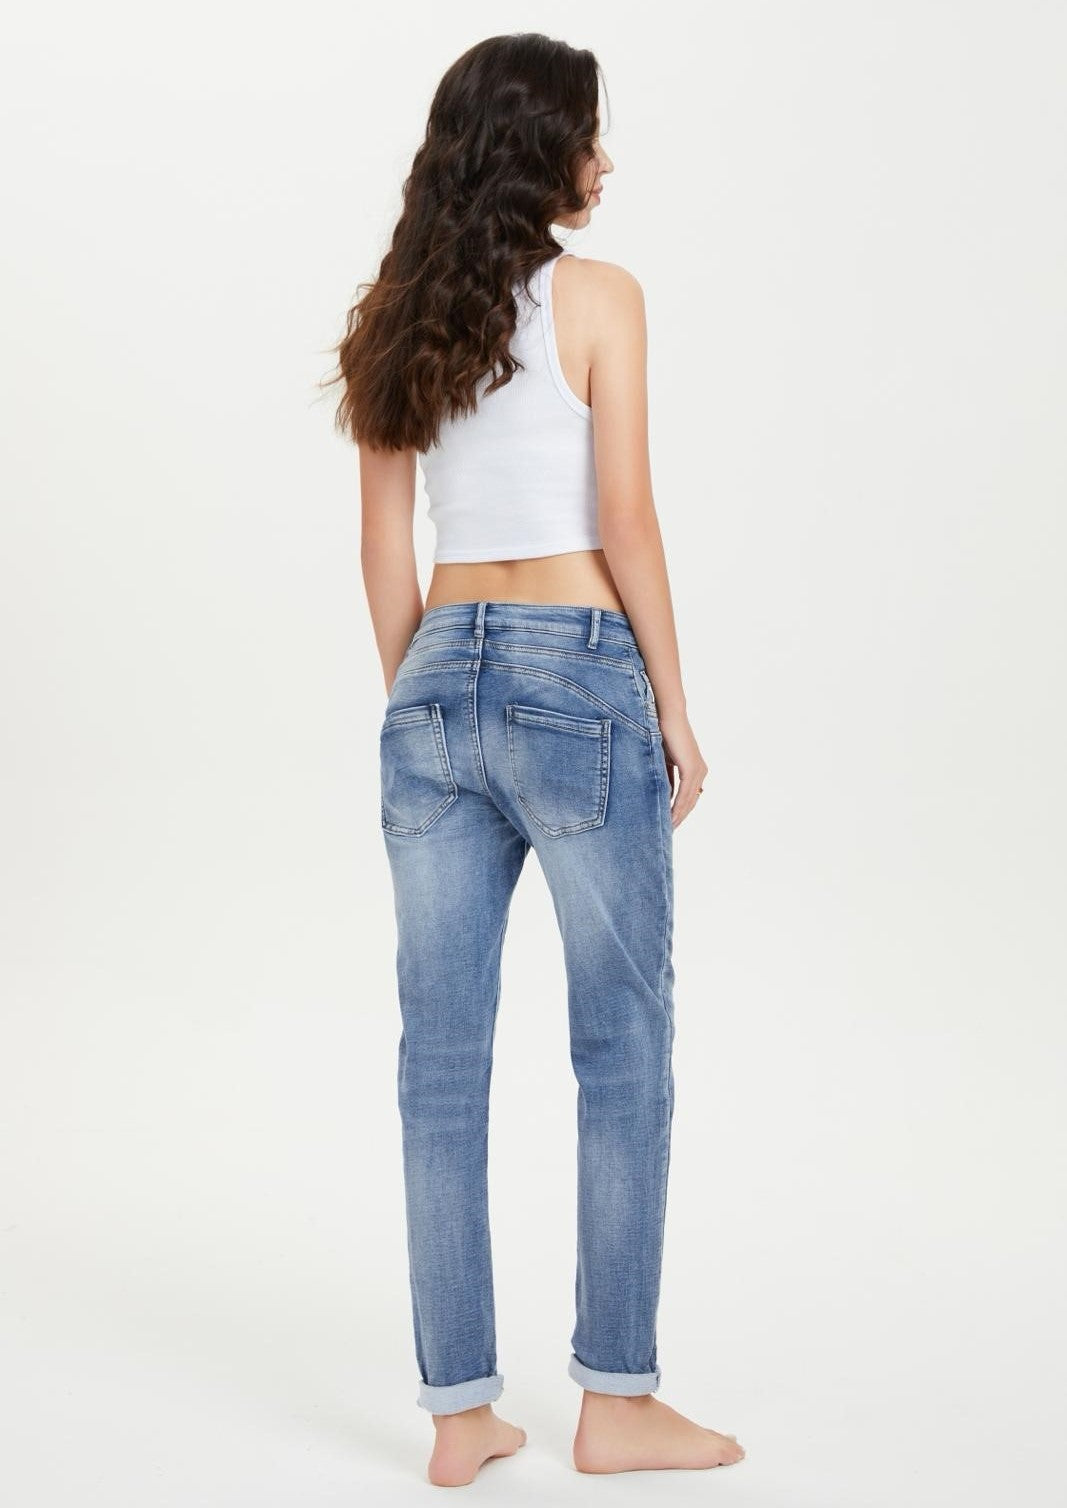 Melly & Co Hidden Fly Denim Jeans